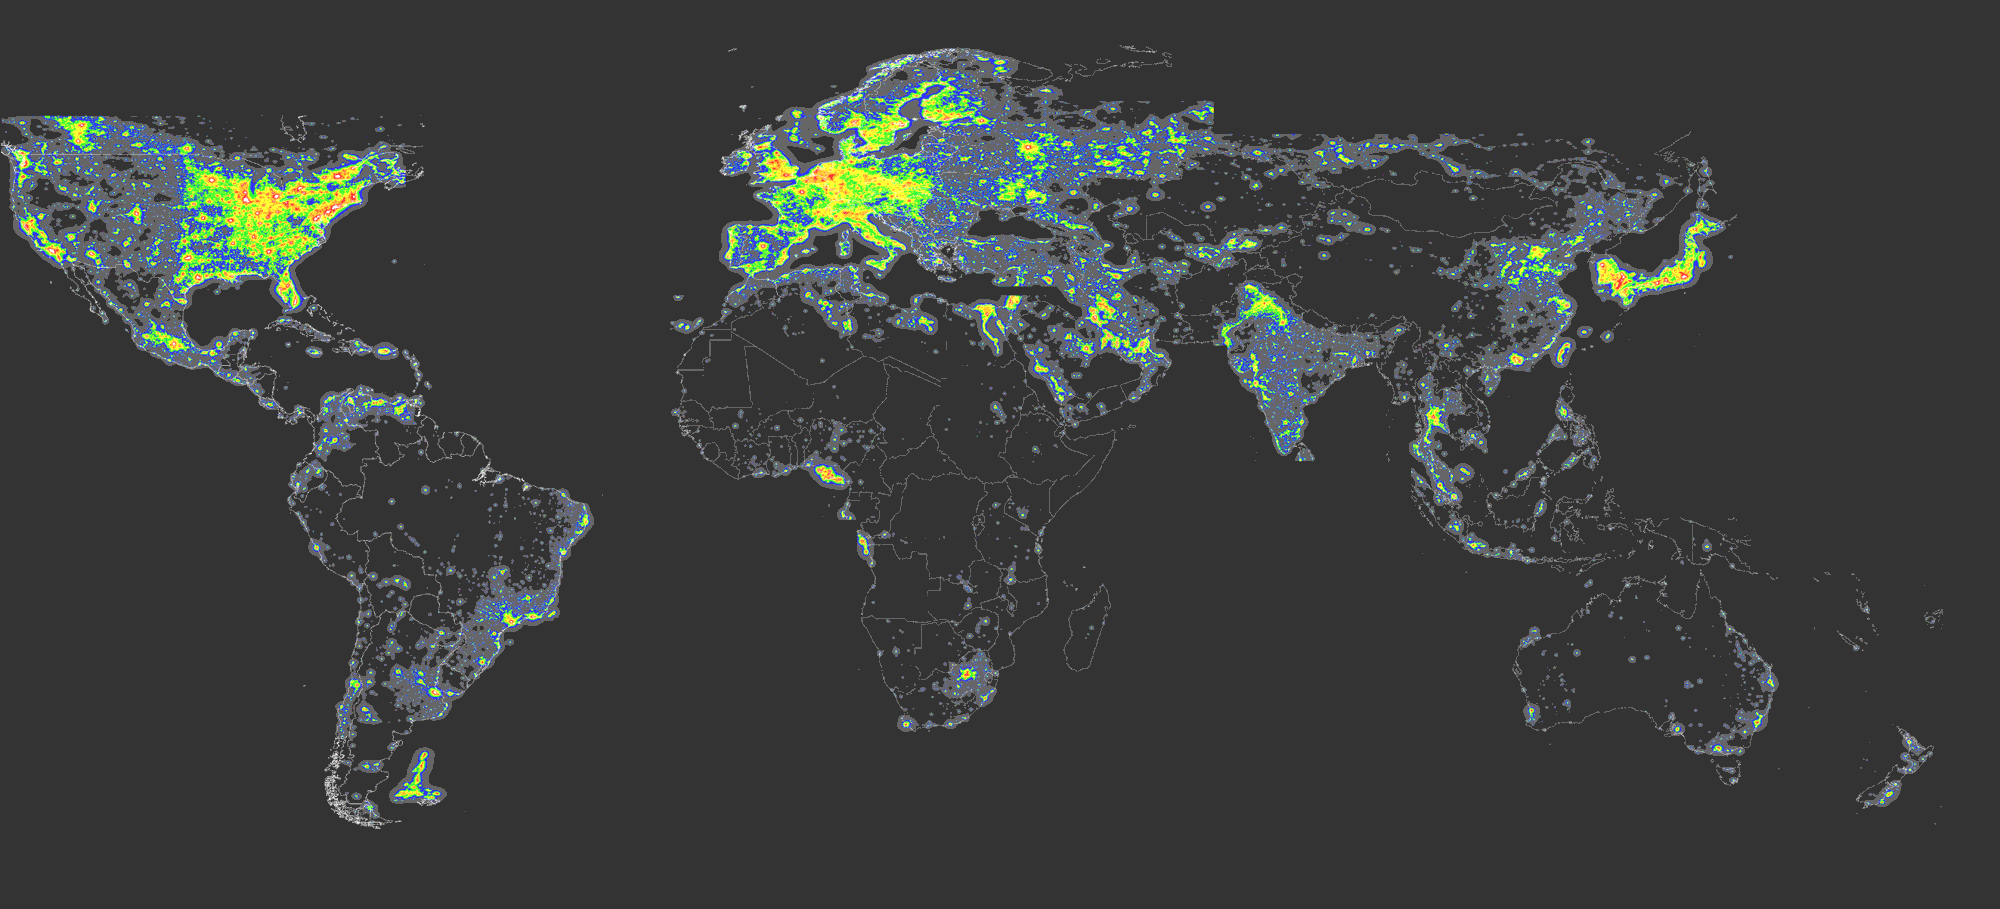 The World Atlas Of The Artificial Night Sky Brightness